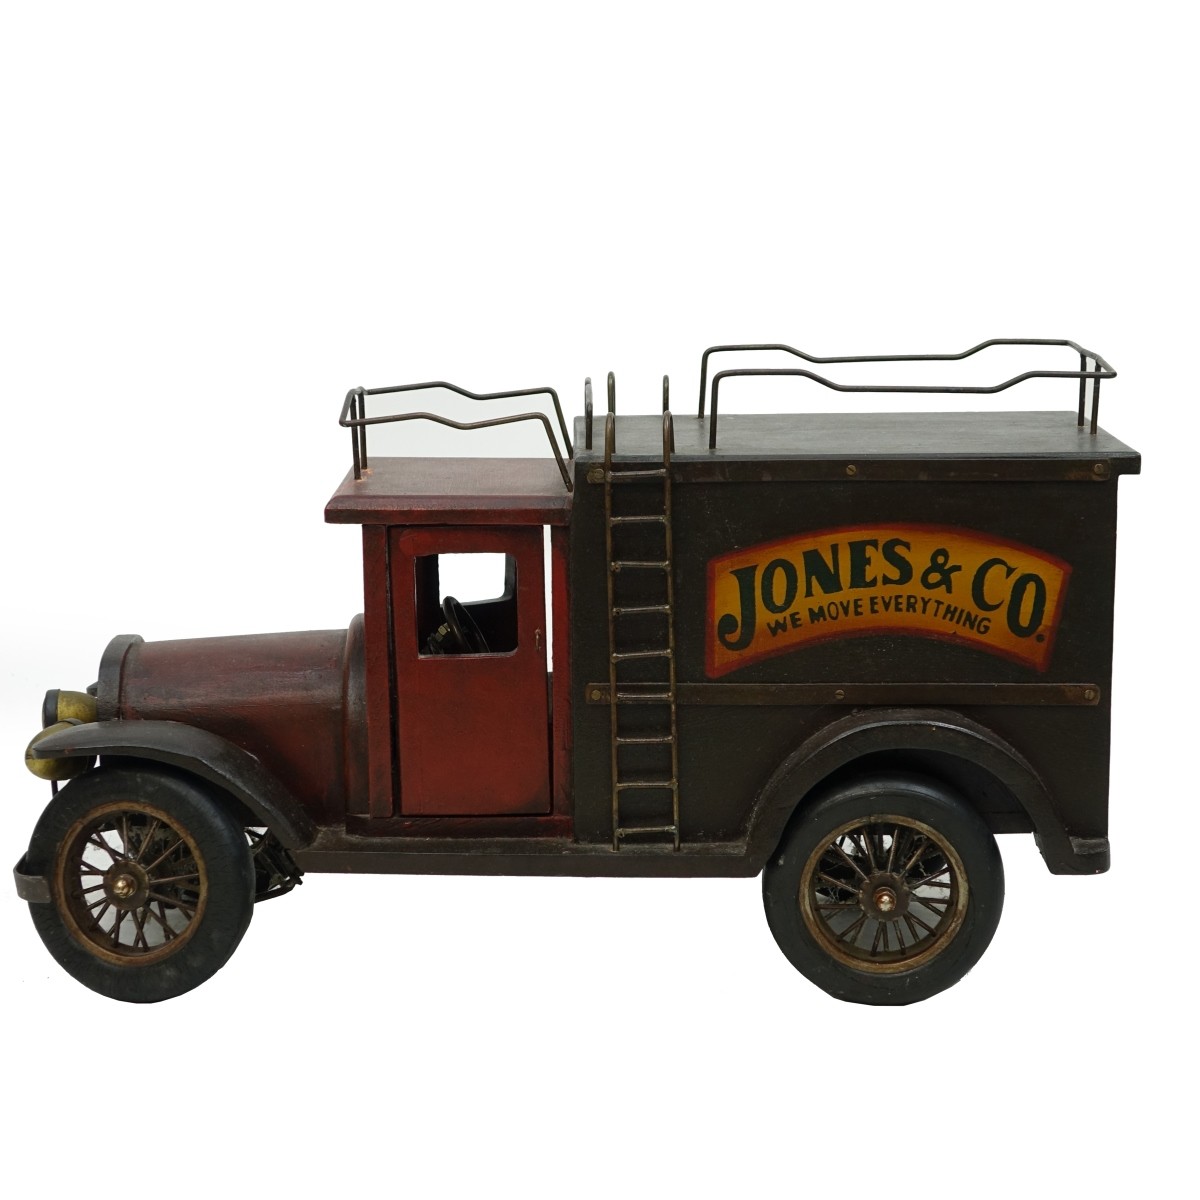 Vintage Lg. Wooden Truck marked Jones & Co.